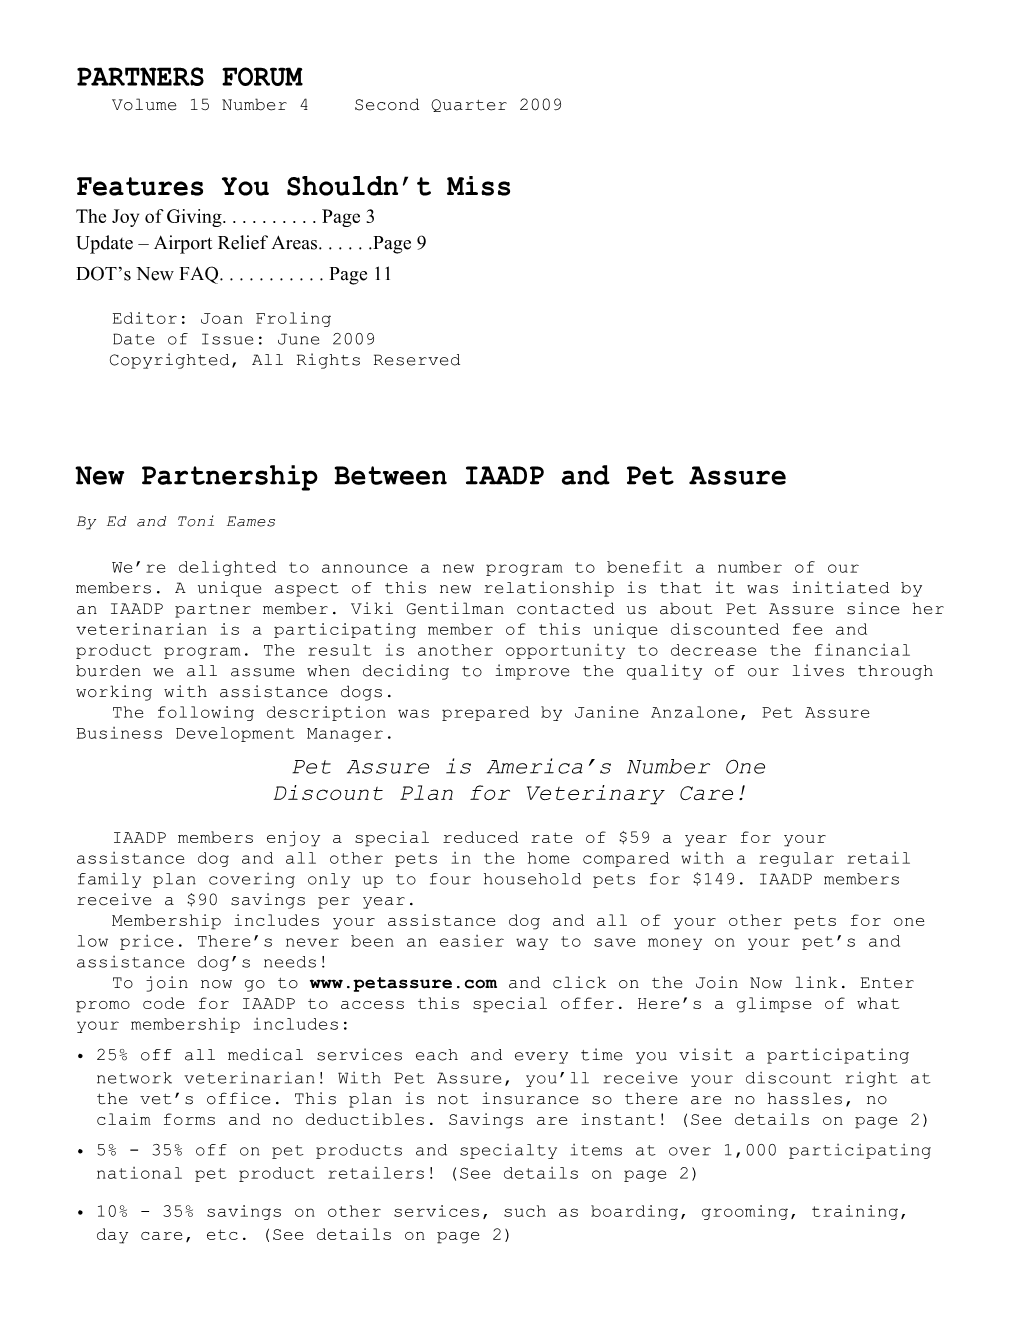 New Partnership Between IAADP and Pet Assure